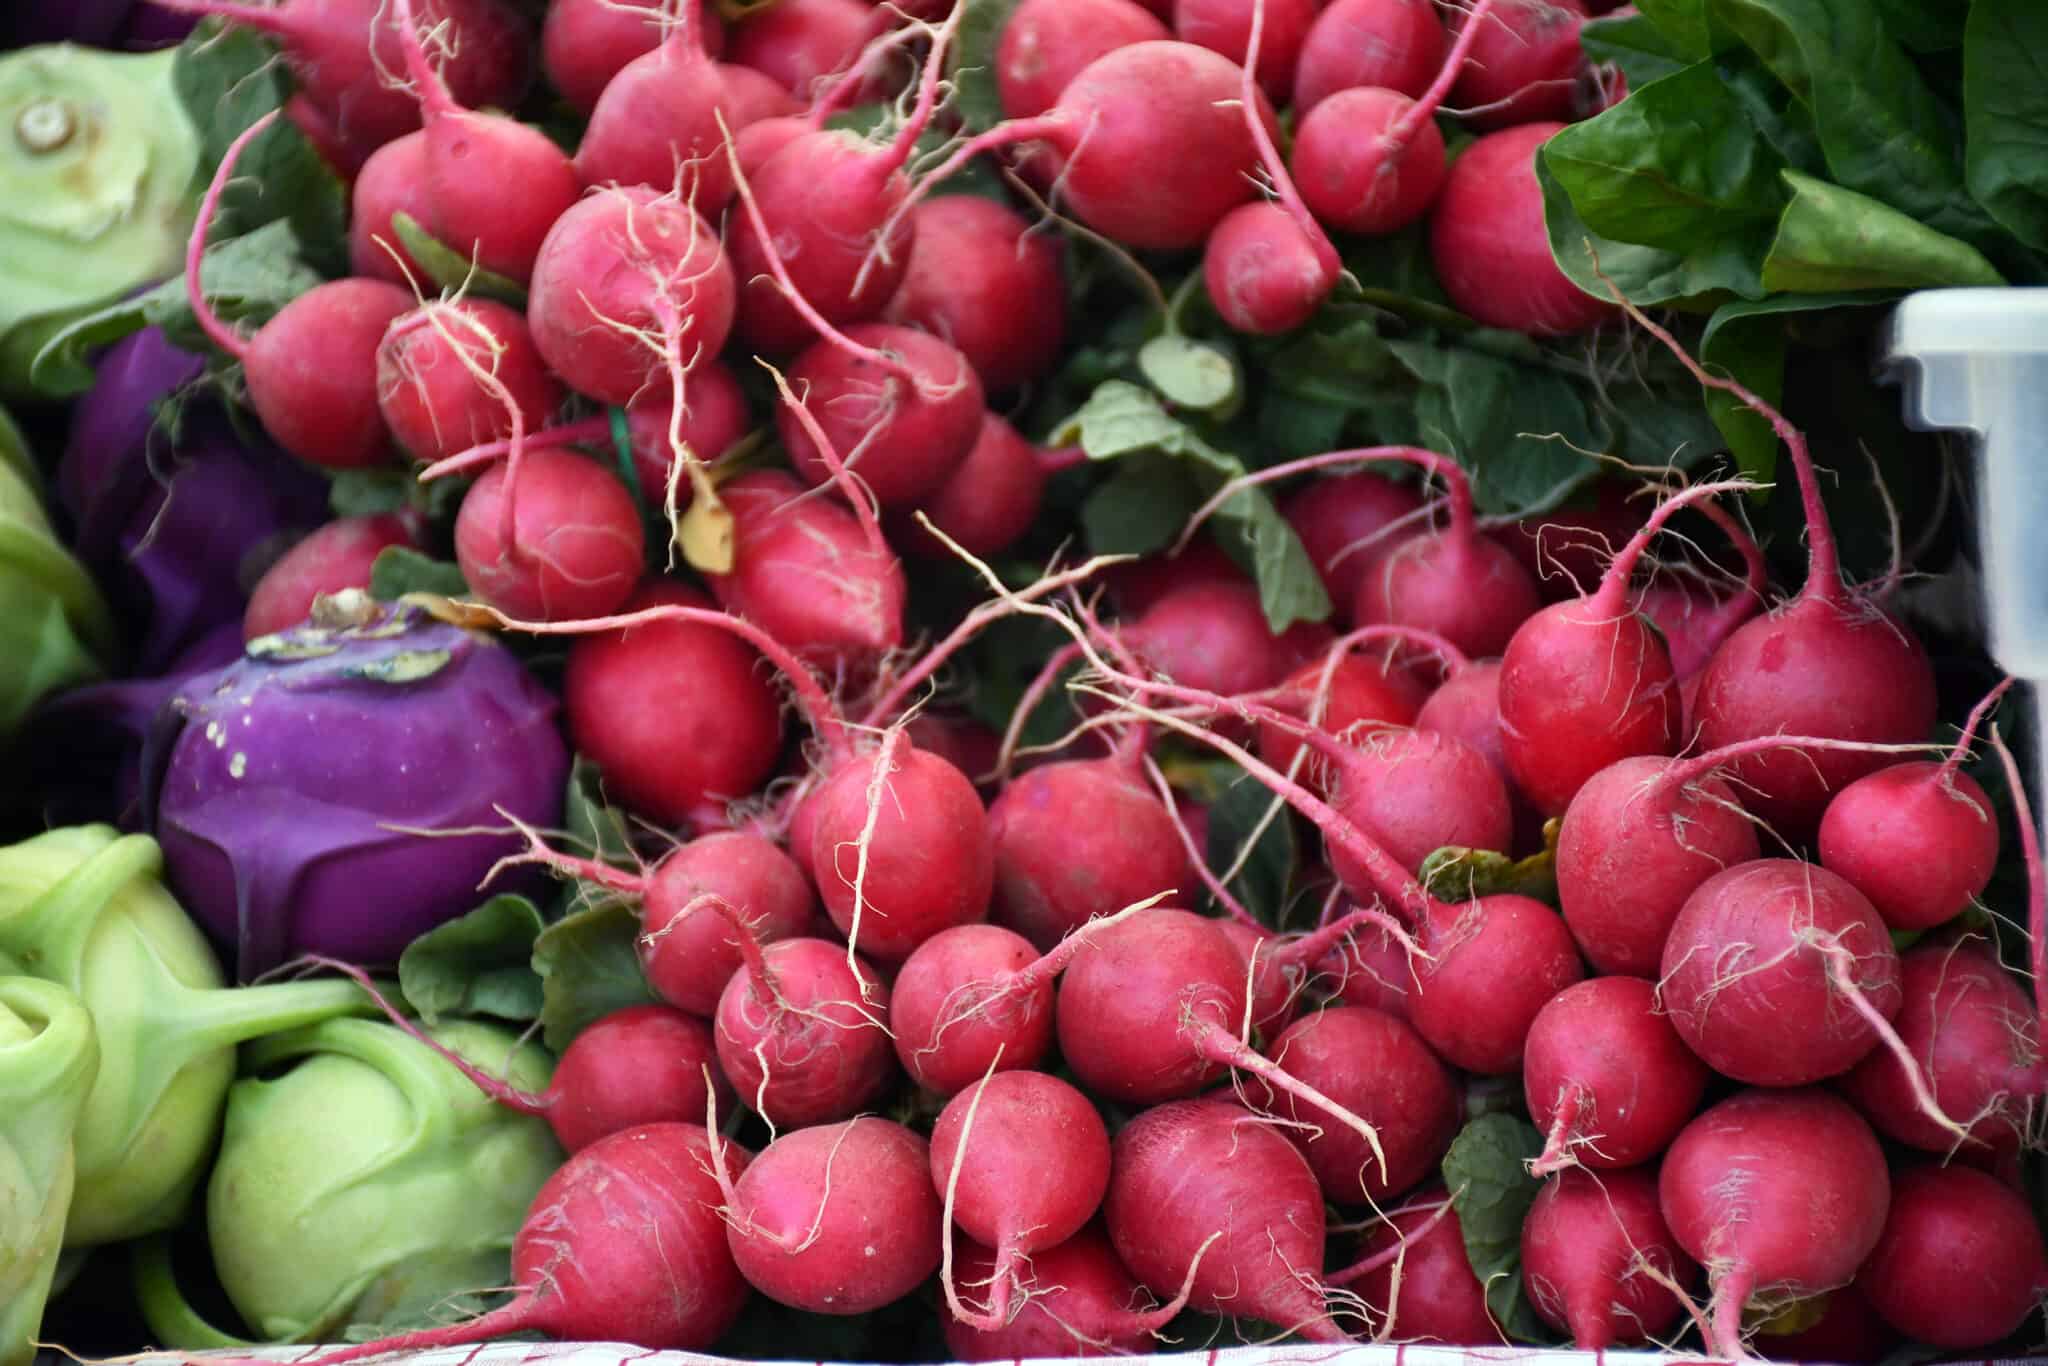 Tomahawk Farmers’ Market taking part in Aspirus’ Fruit and Vegetable Prescription Program